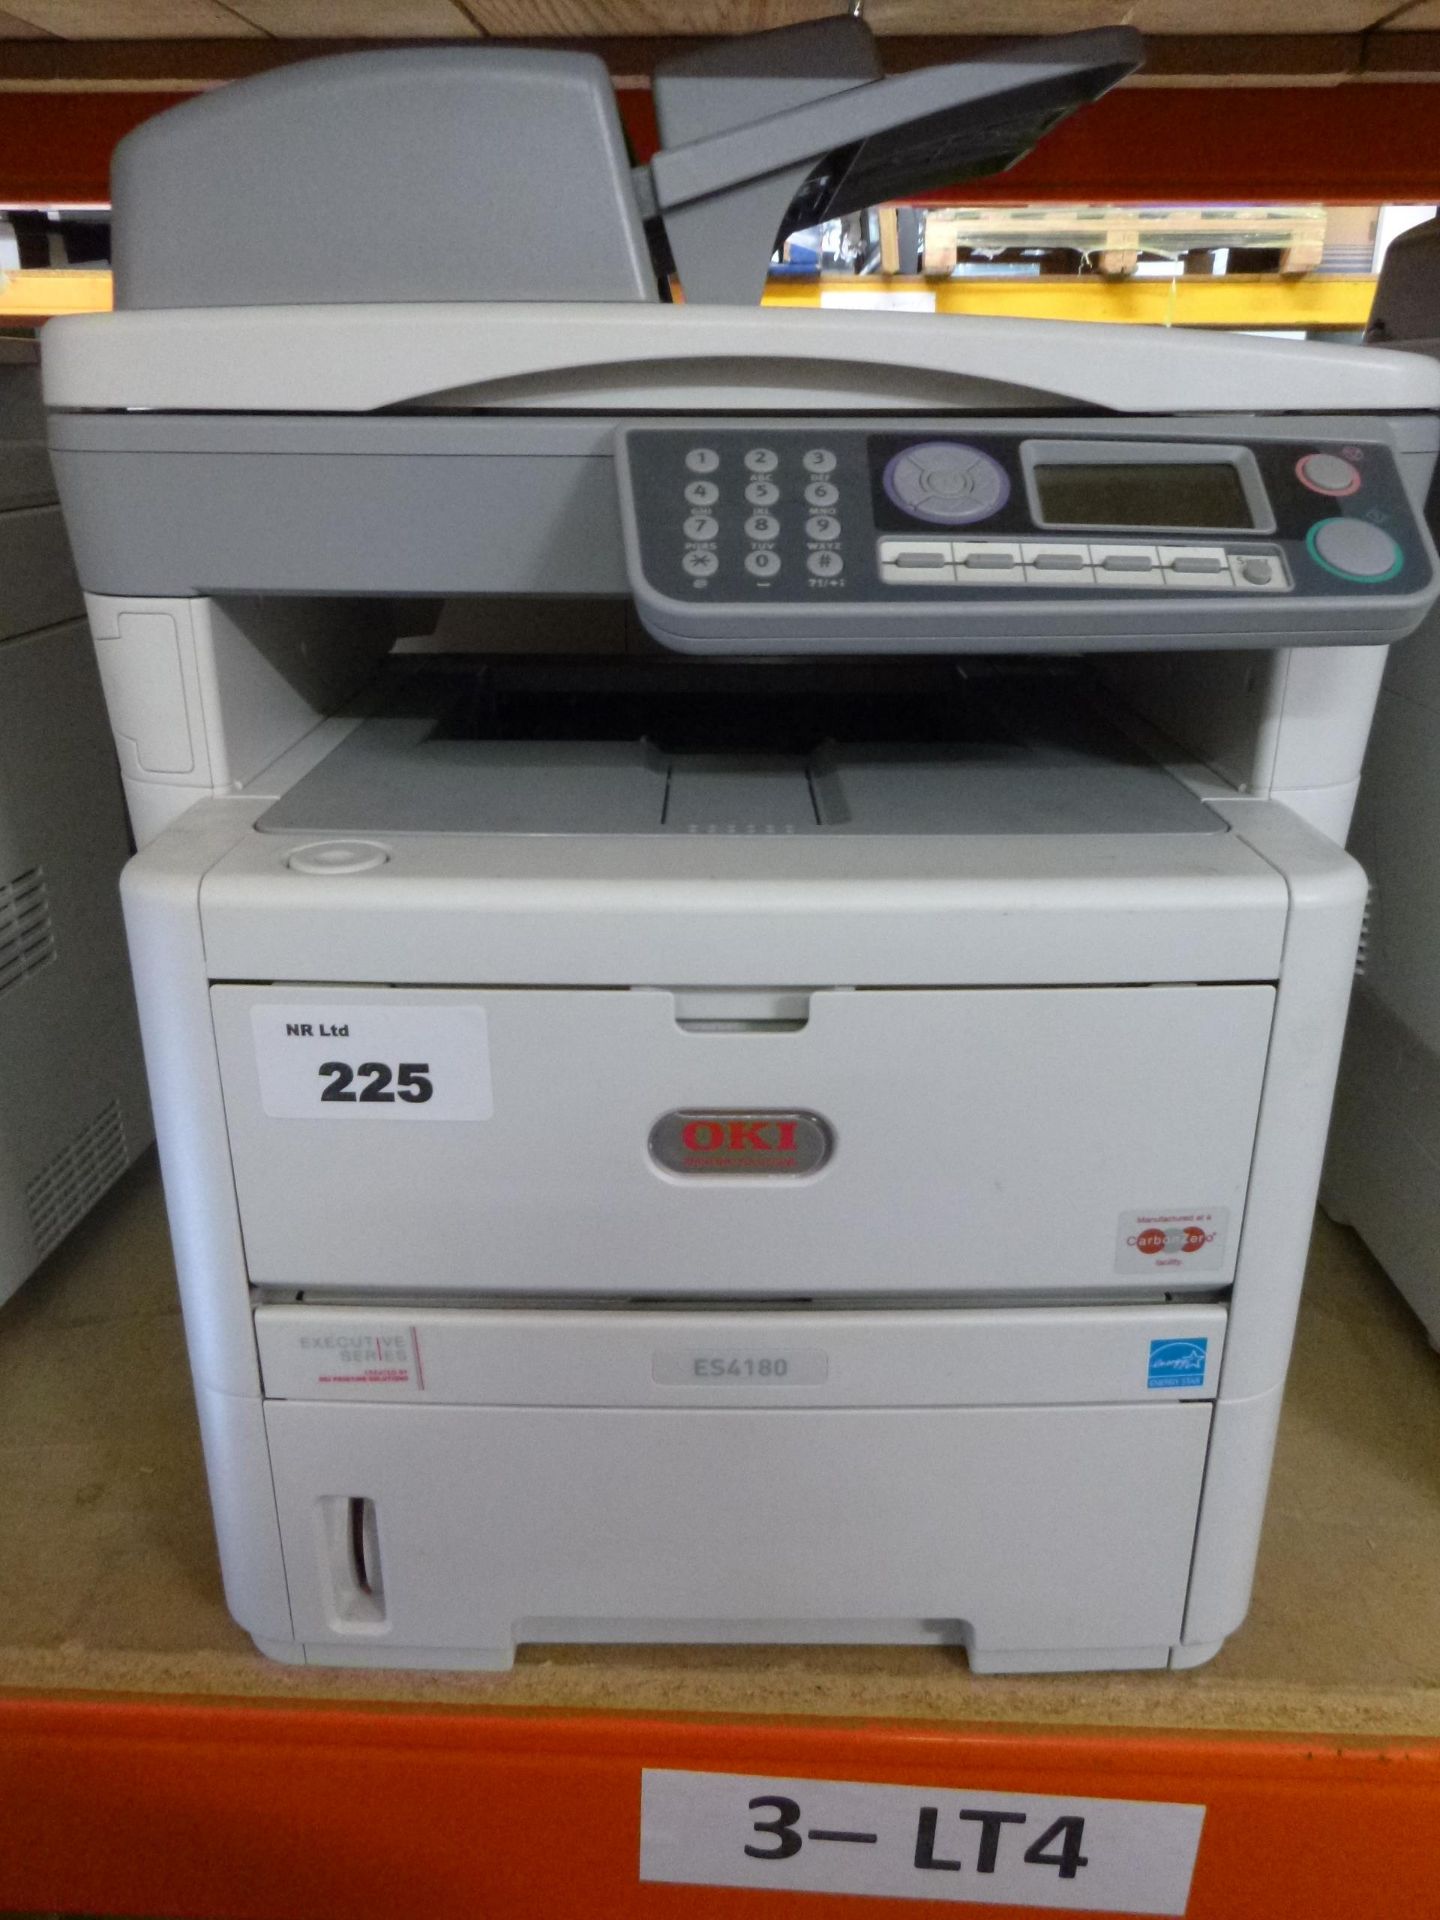 OKI ES4180mfp NETWORK Laser printer with test print